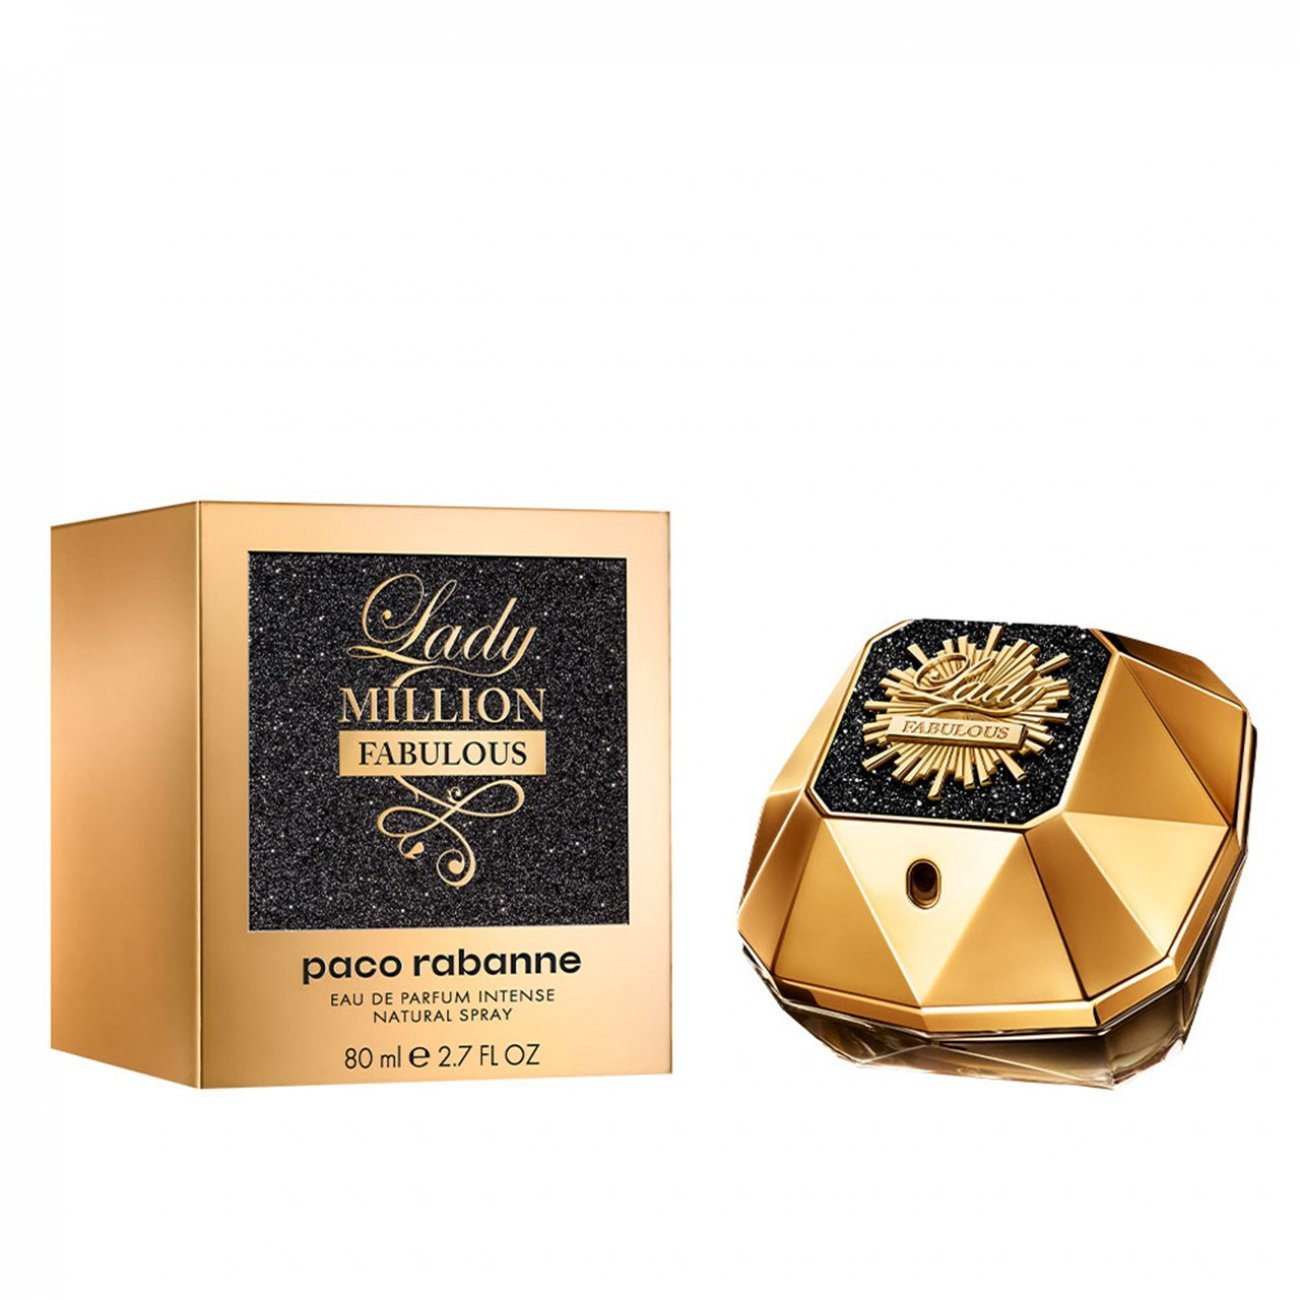 Buy Paco Rabanne Lady Million Fabulous Eau Parfum Intense 80ml (2.7fl oz) · USA